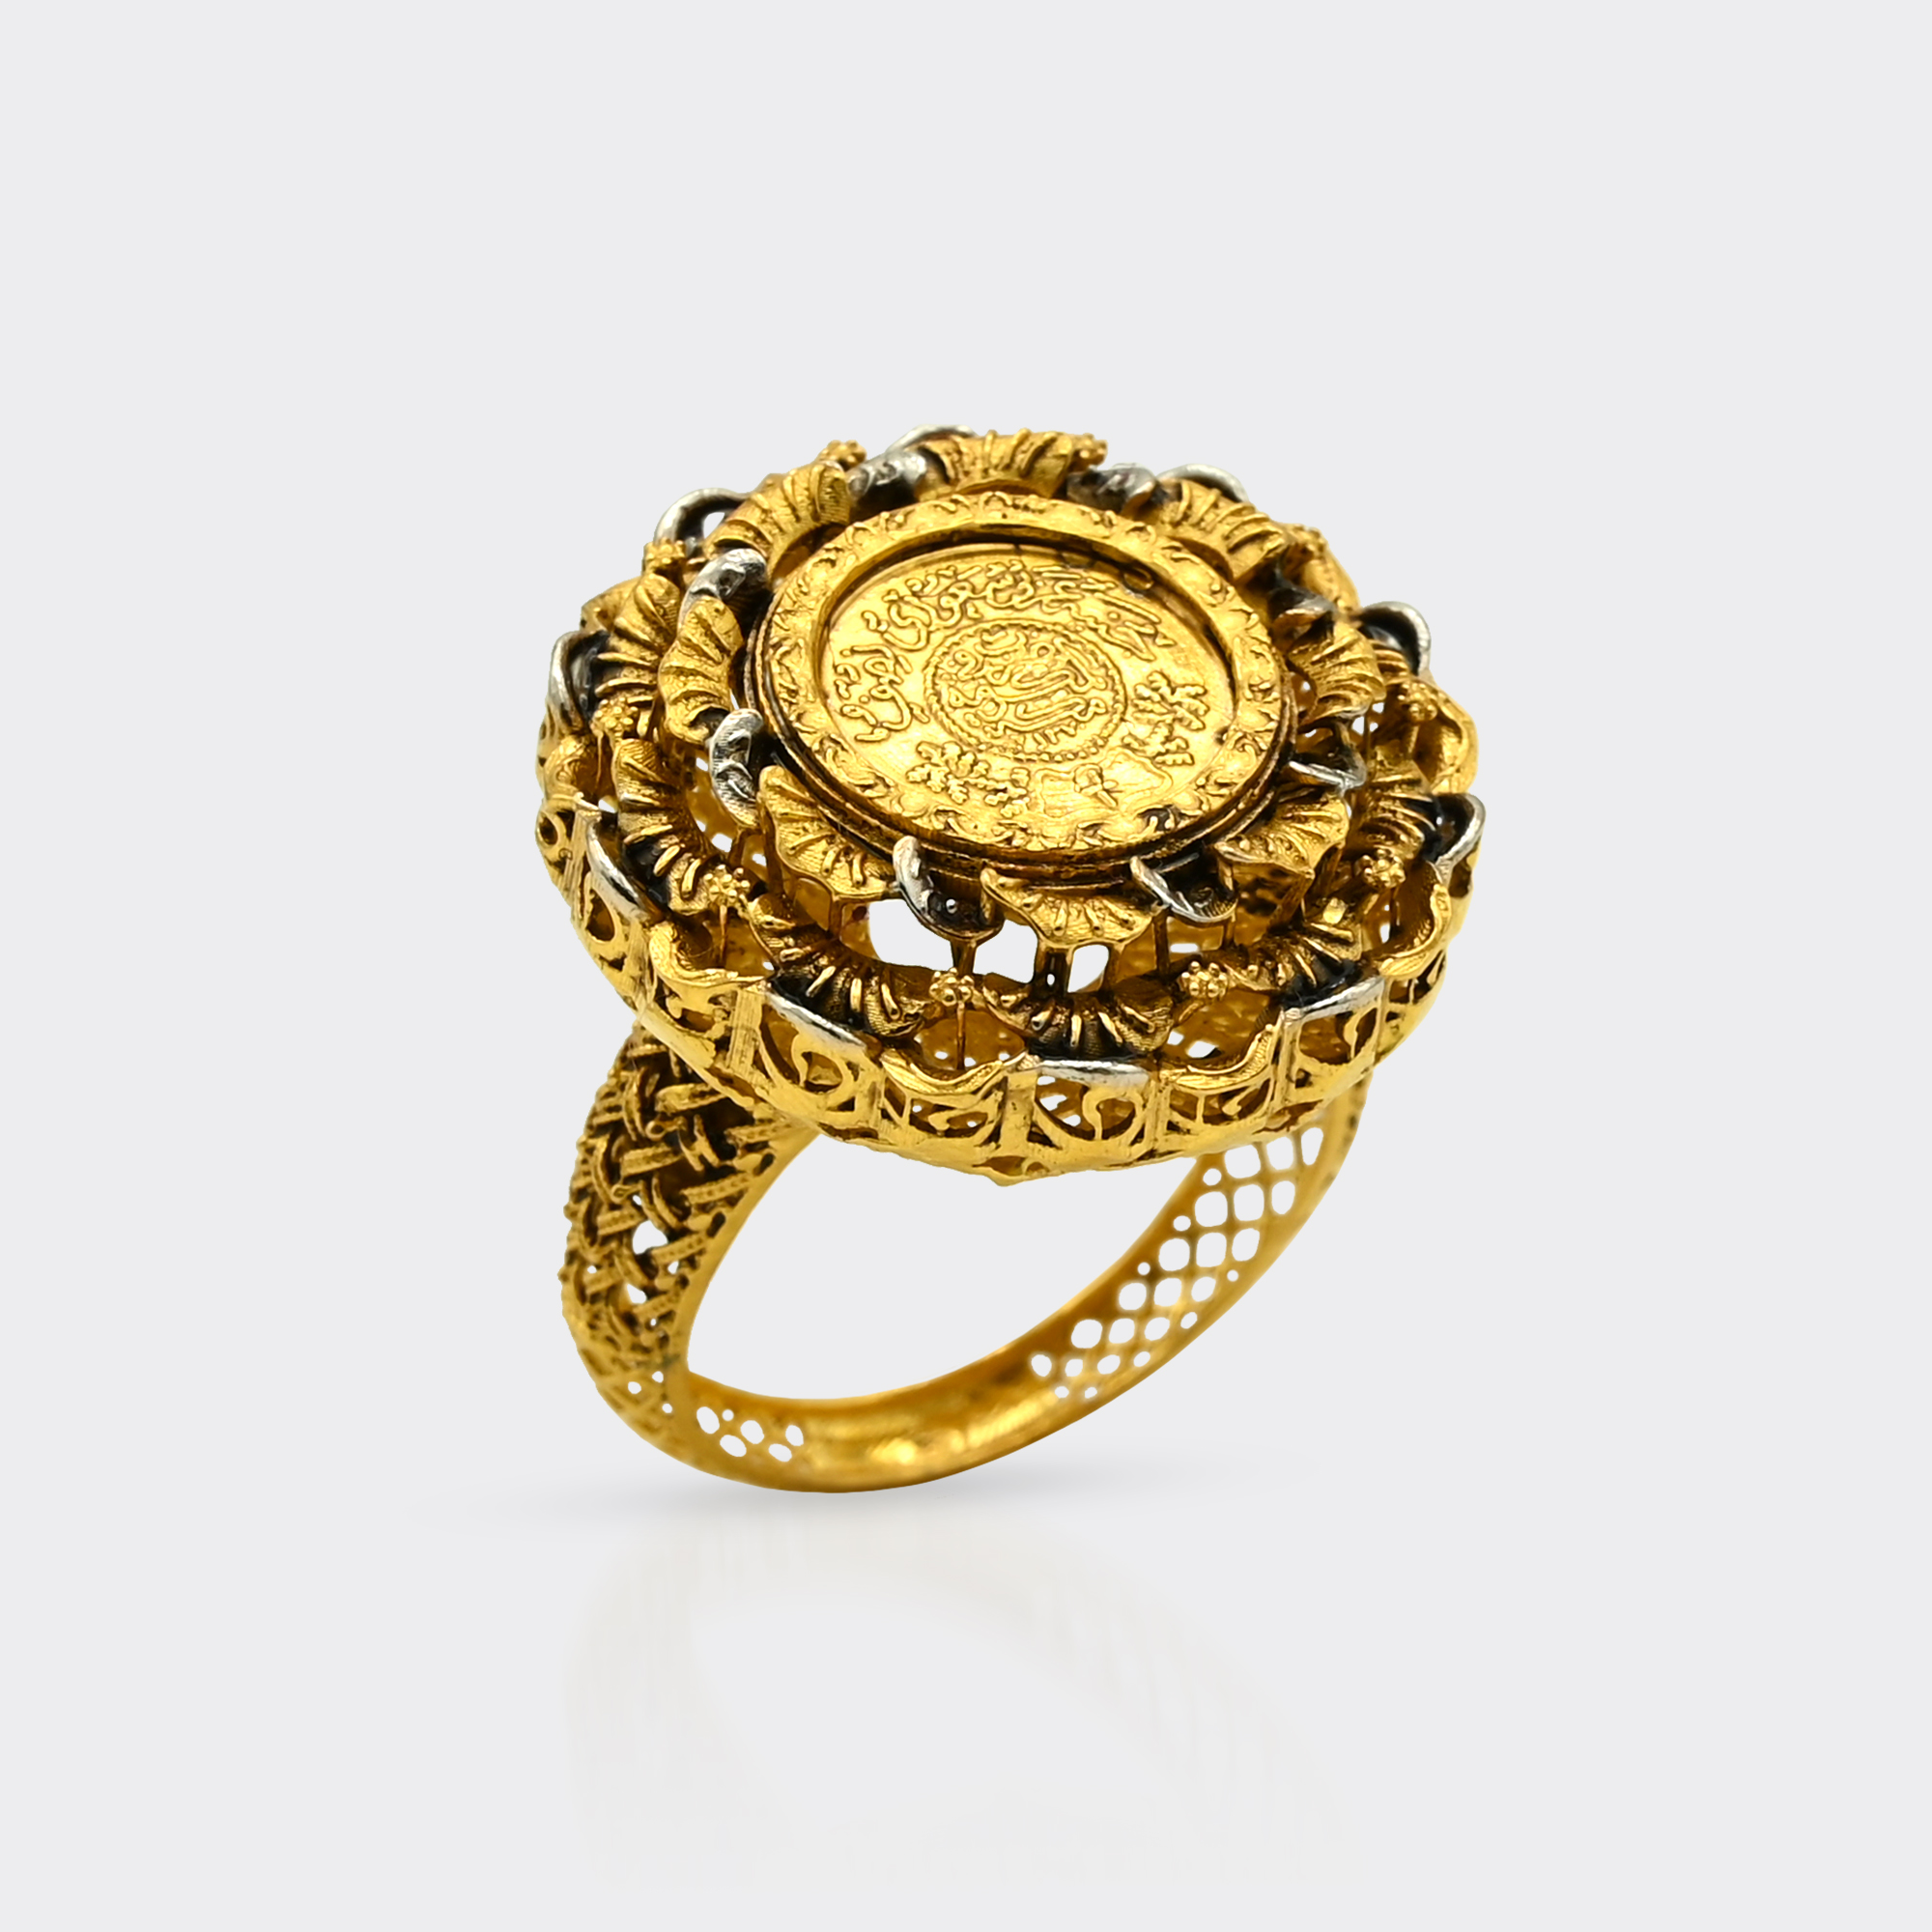 luxury fashion pure 24k gold rings| Alibaba.com